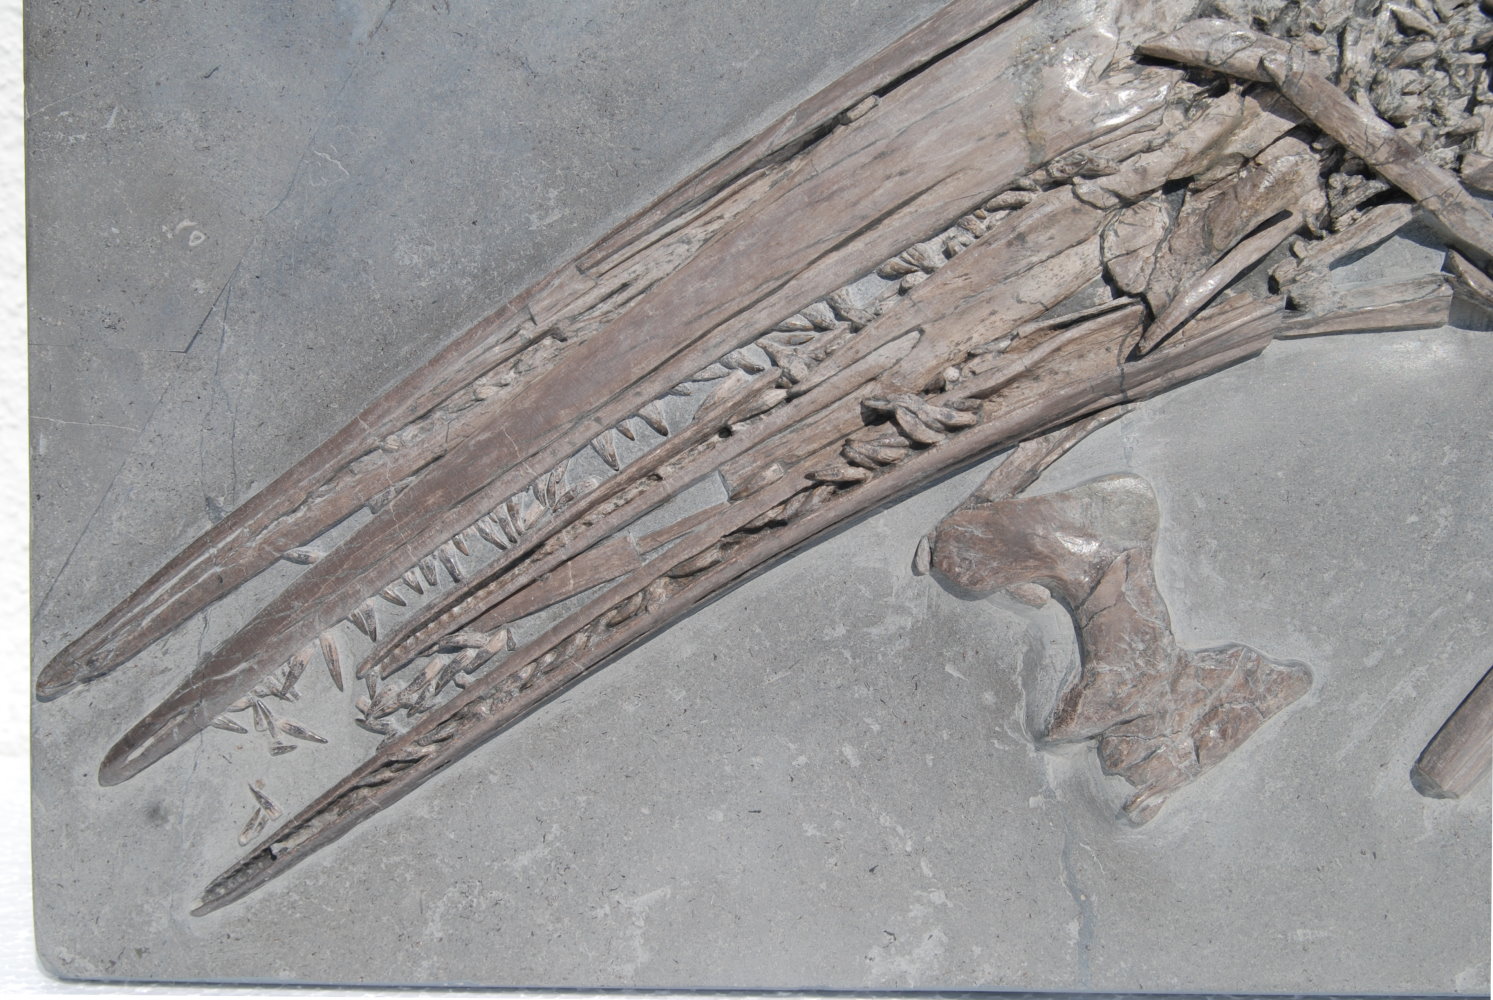 Ichthyosaurus_Holzmaden_05b